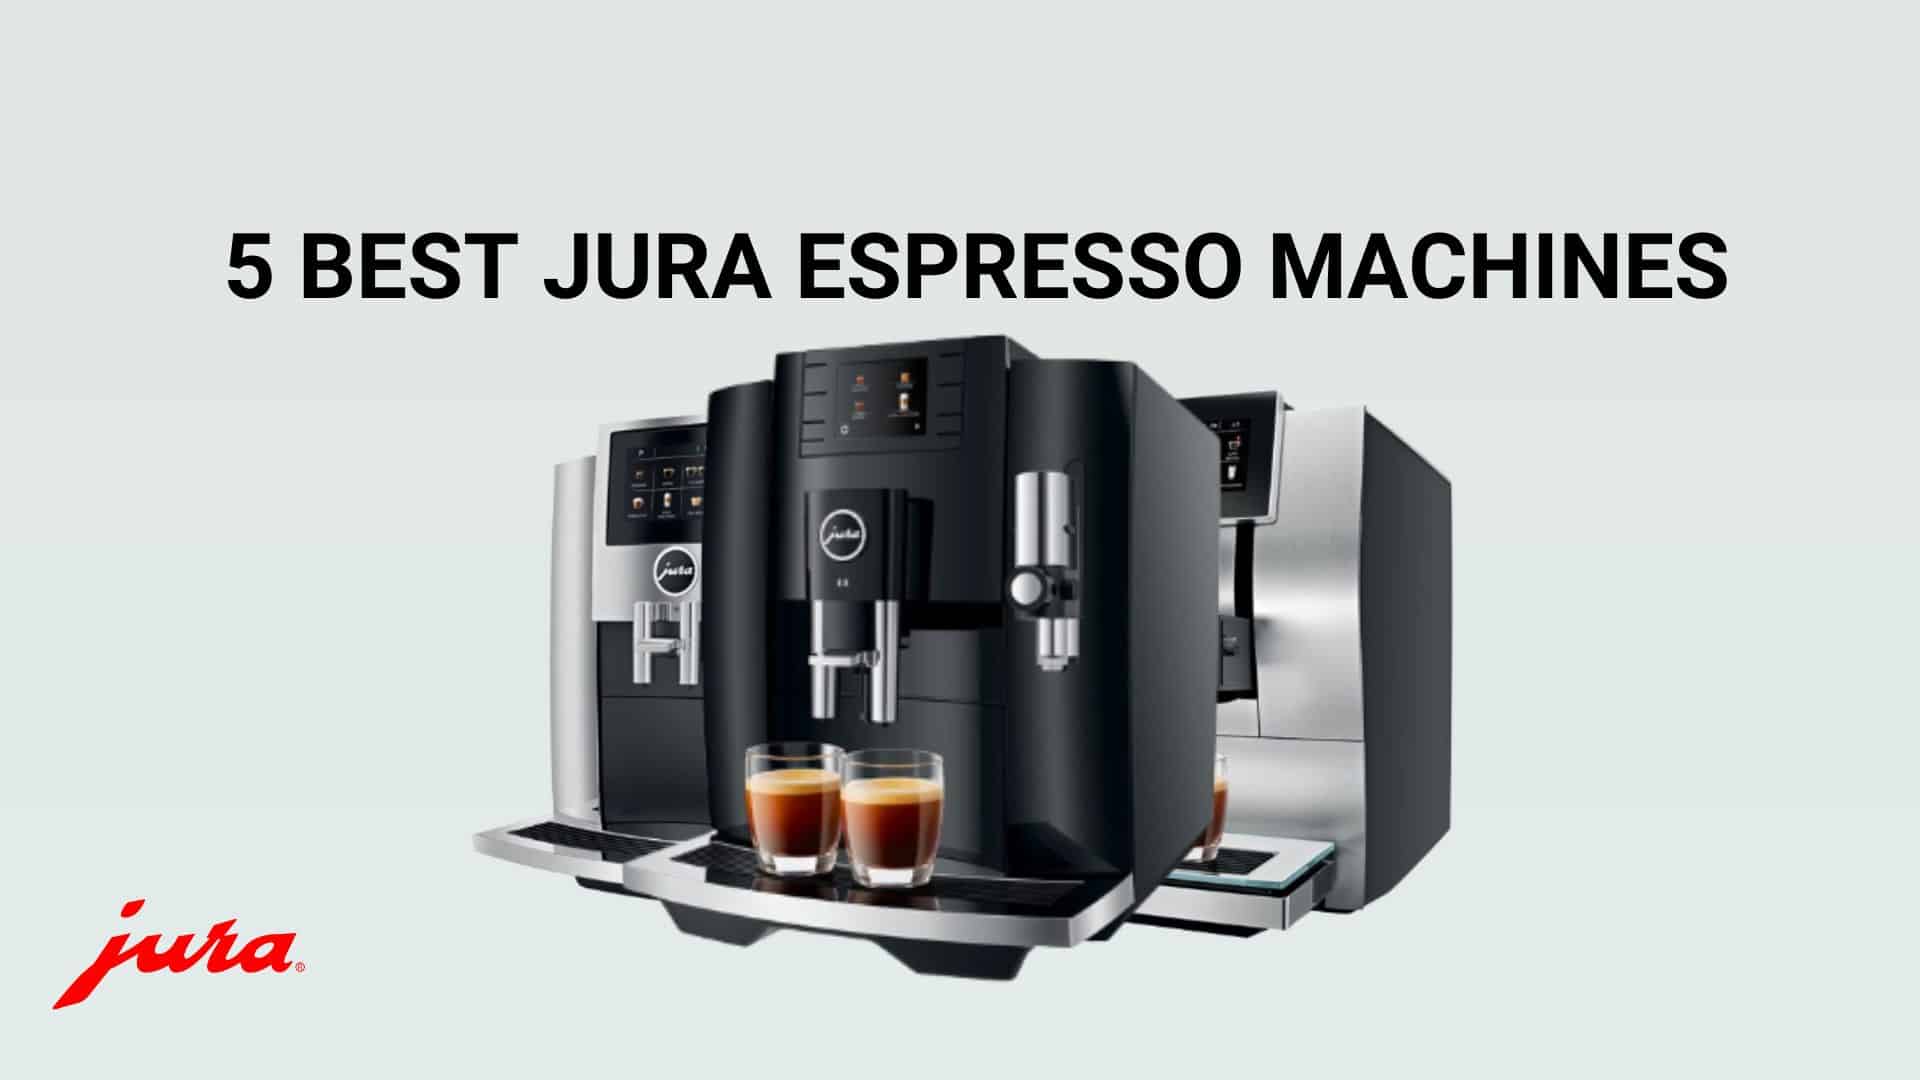 5 Jura espresso machines: Jura top pics